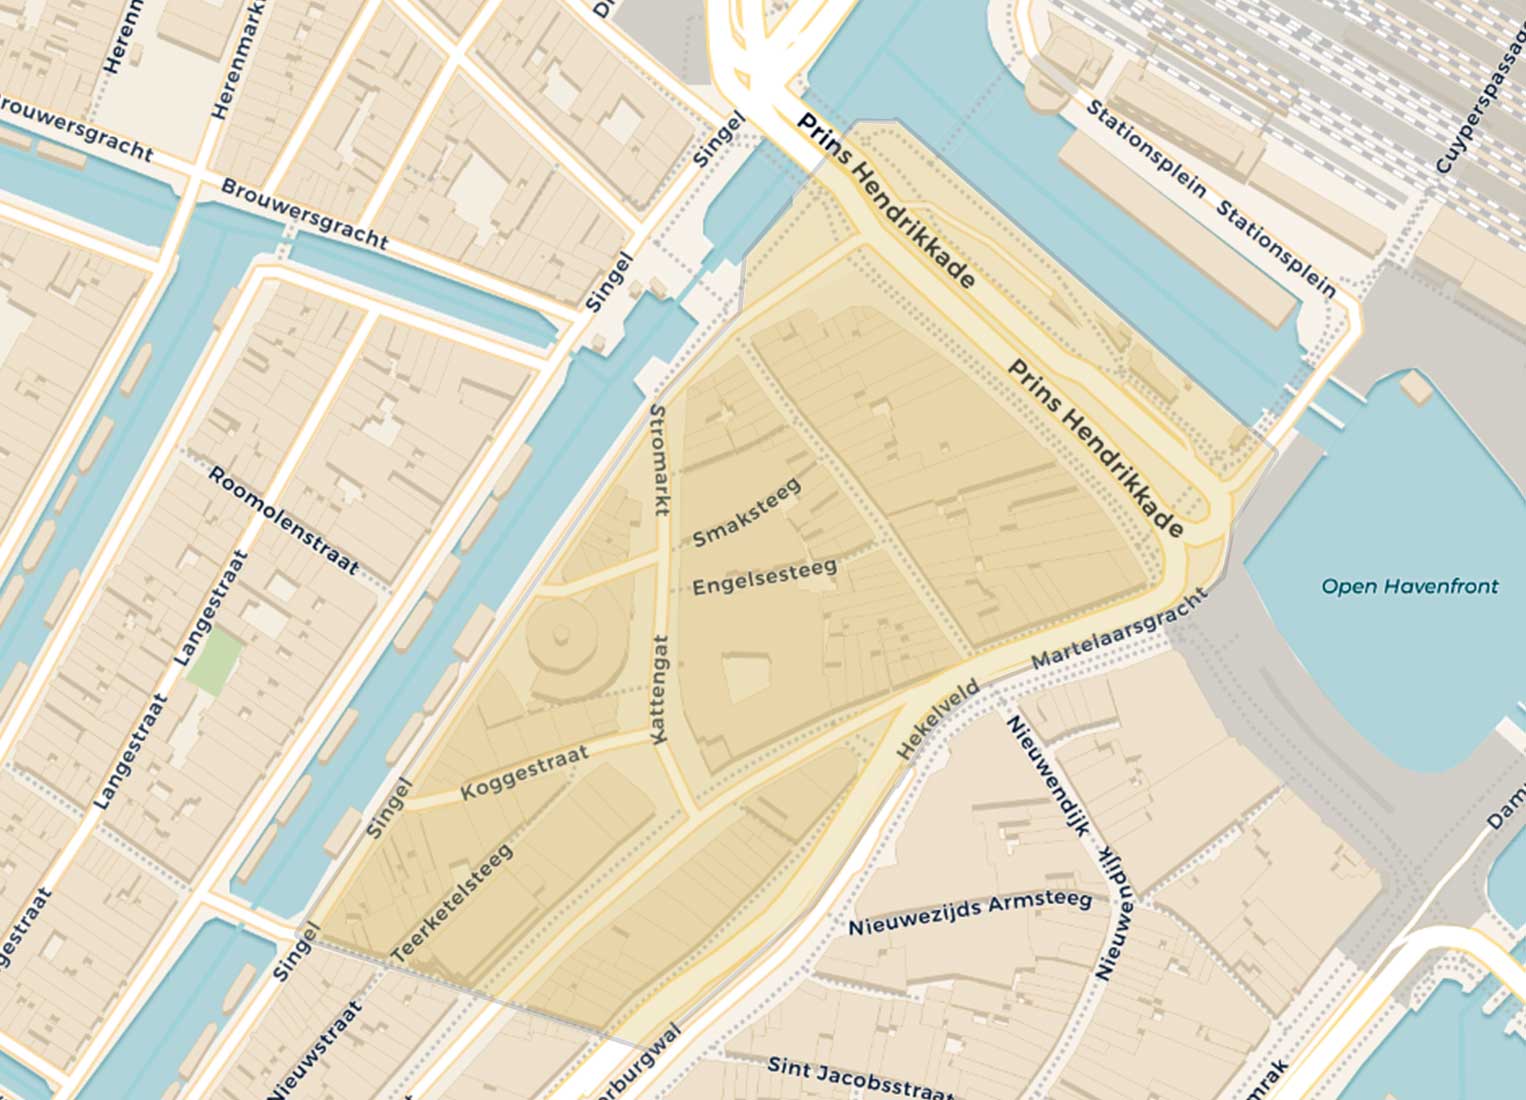 The Hemelrijk neighbourhood in Amsterdam on today's map